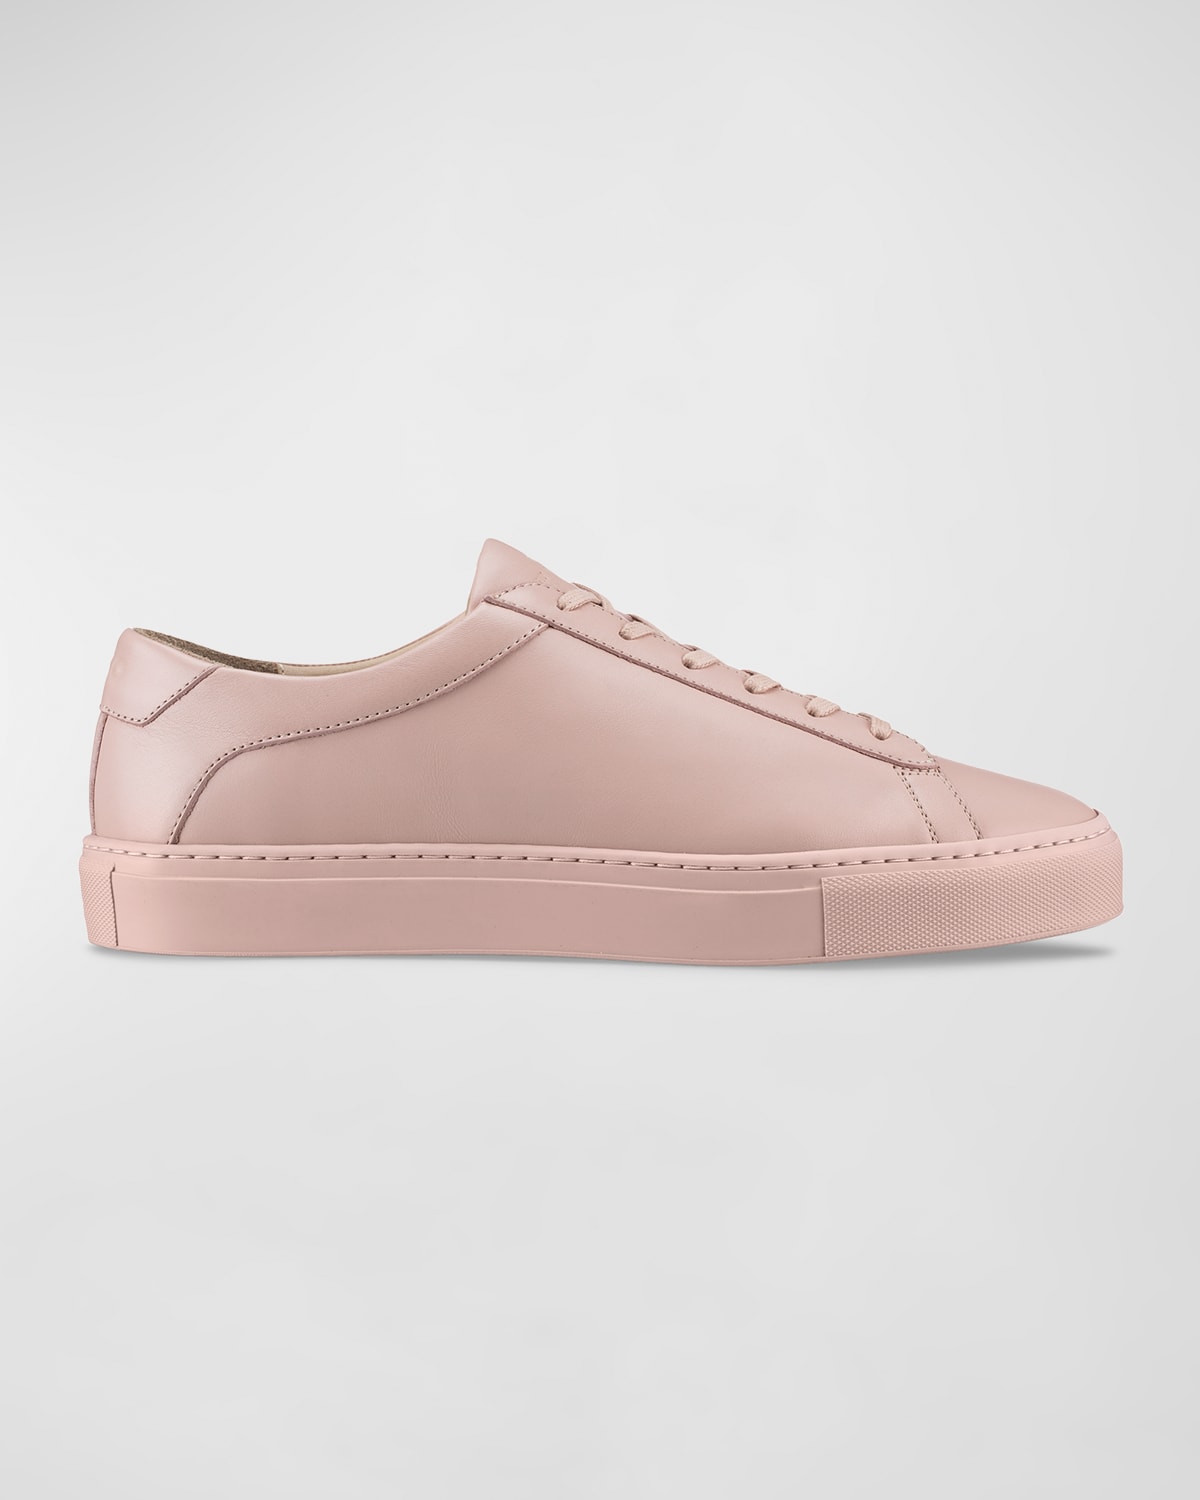 Koio Capri Mixed Leather Low-top Sneakers In Pink Quartz